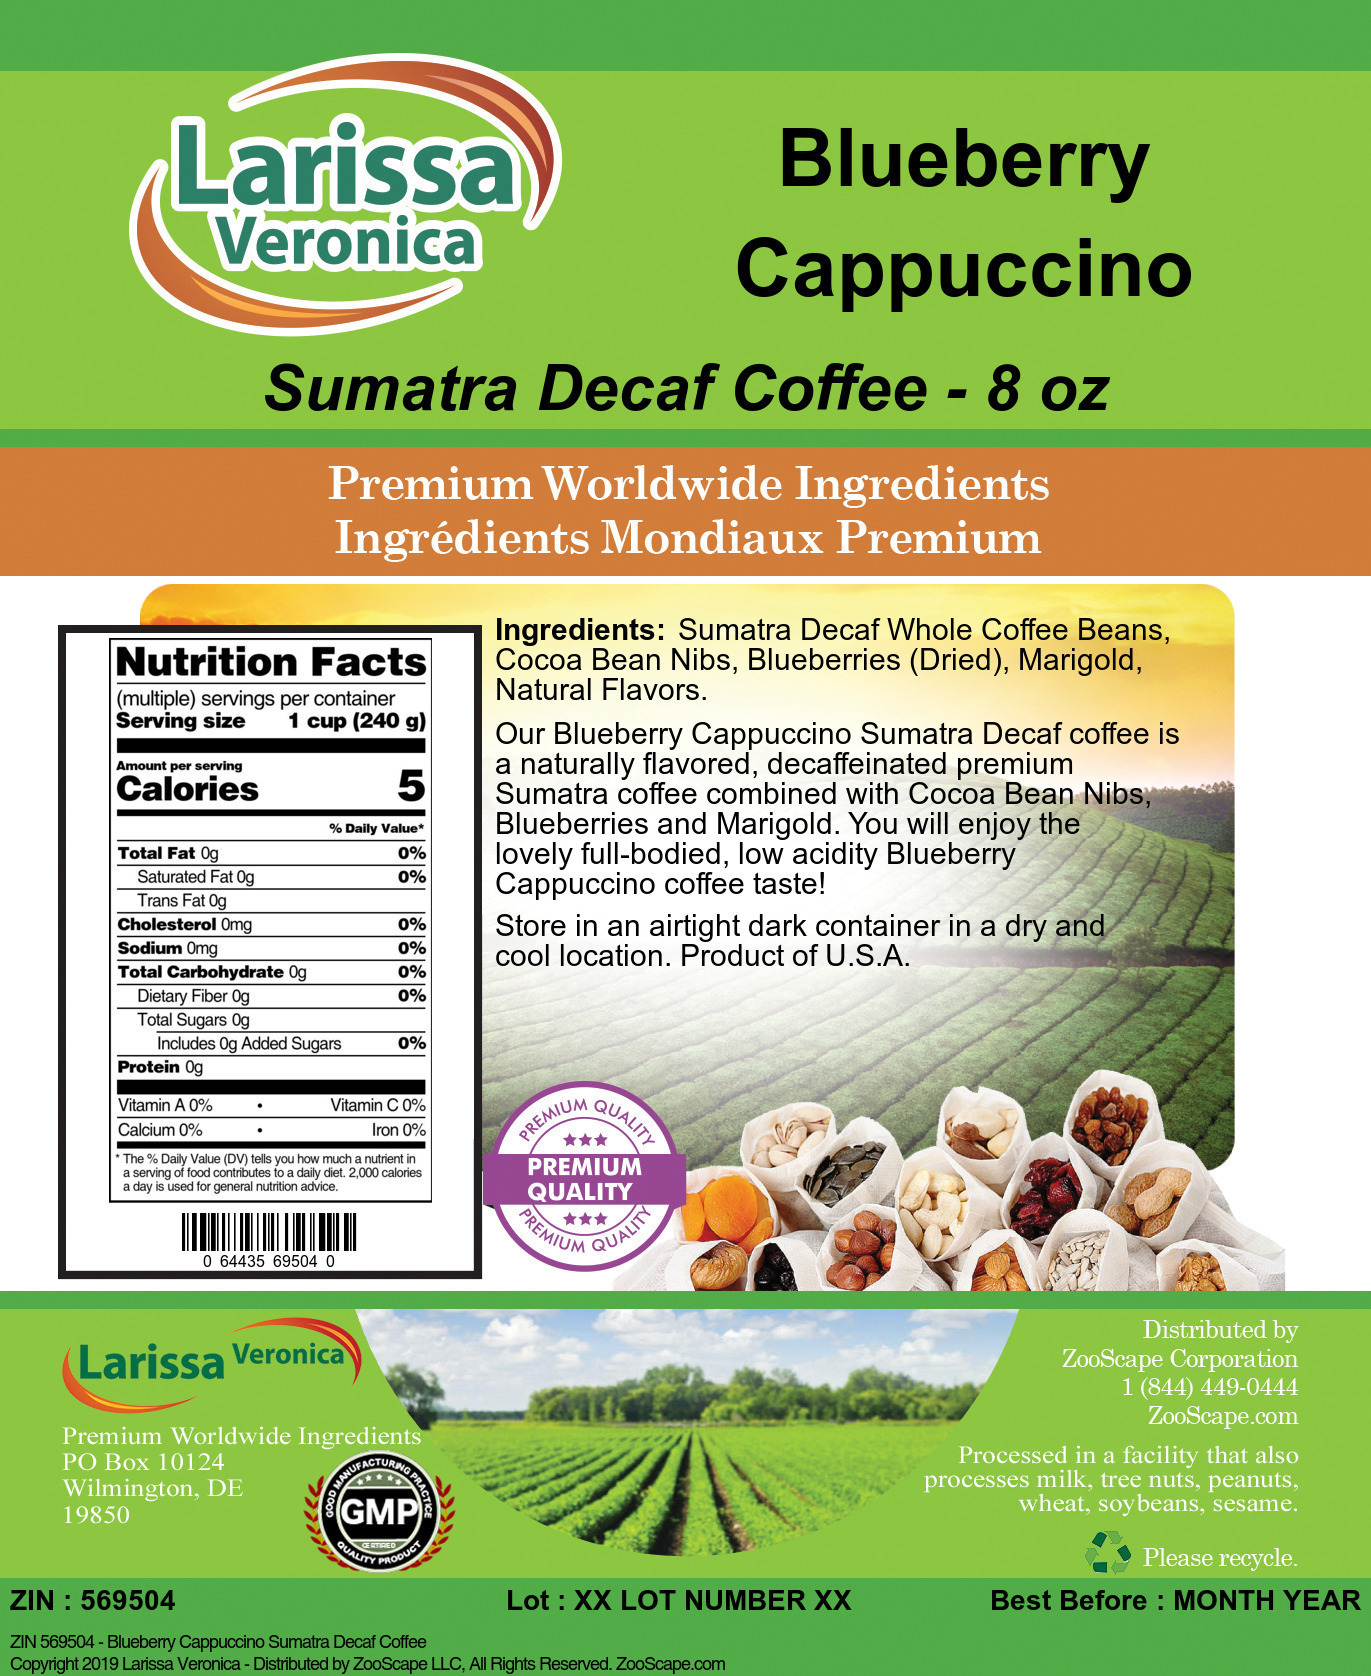 Blueberry Cappuccino Sumatra Decaf Coffee - Label